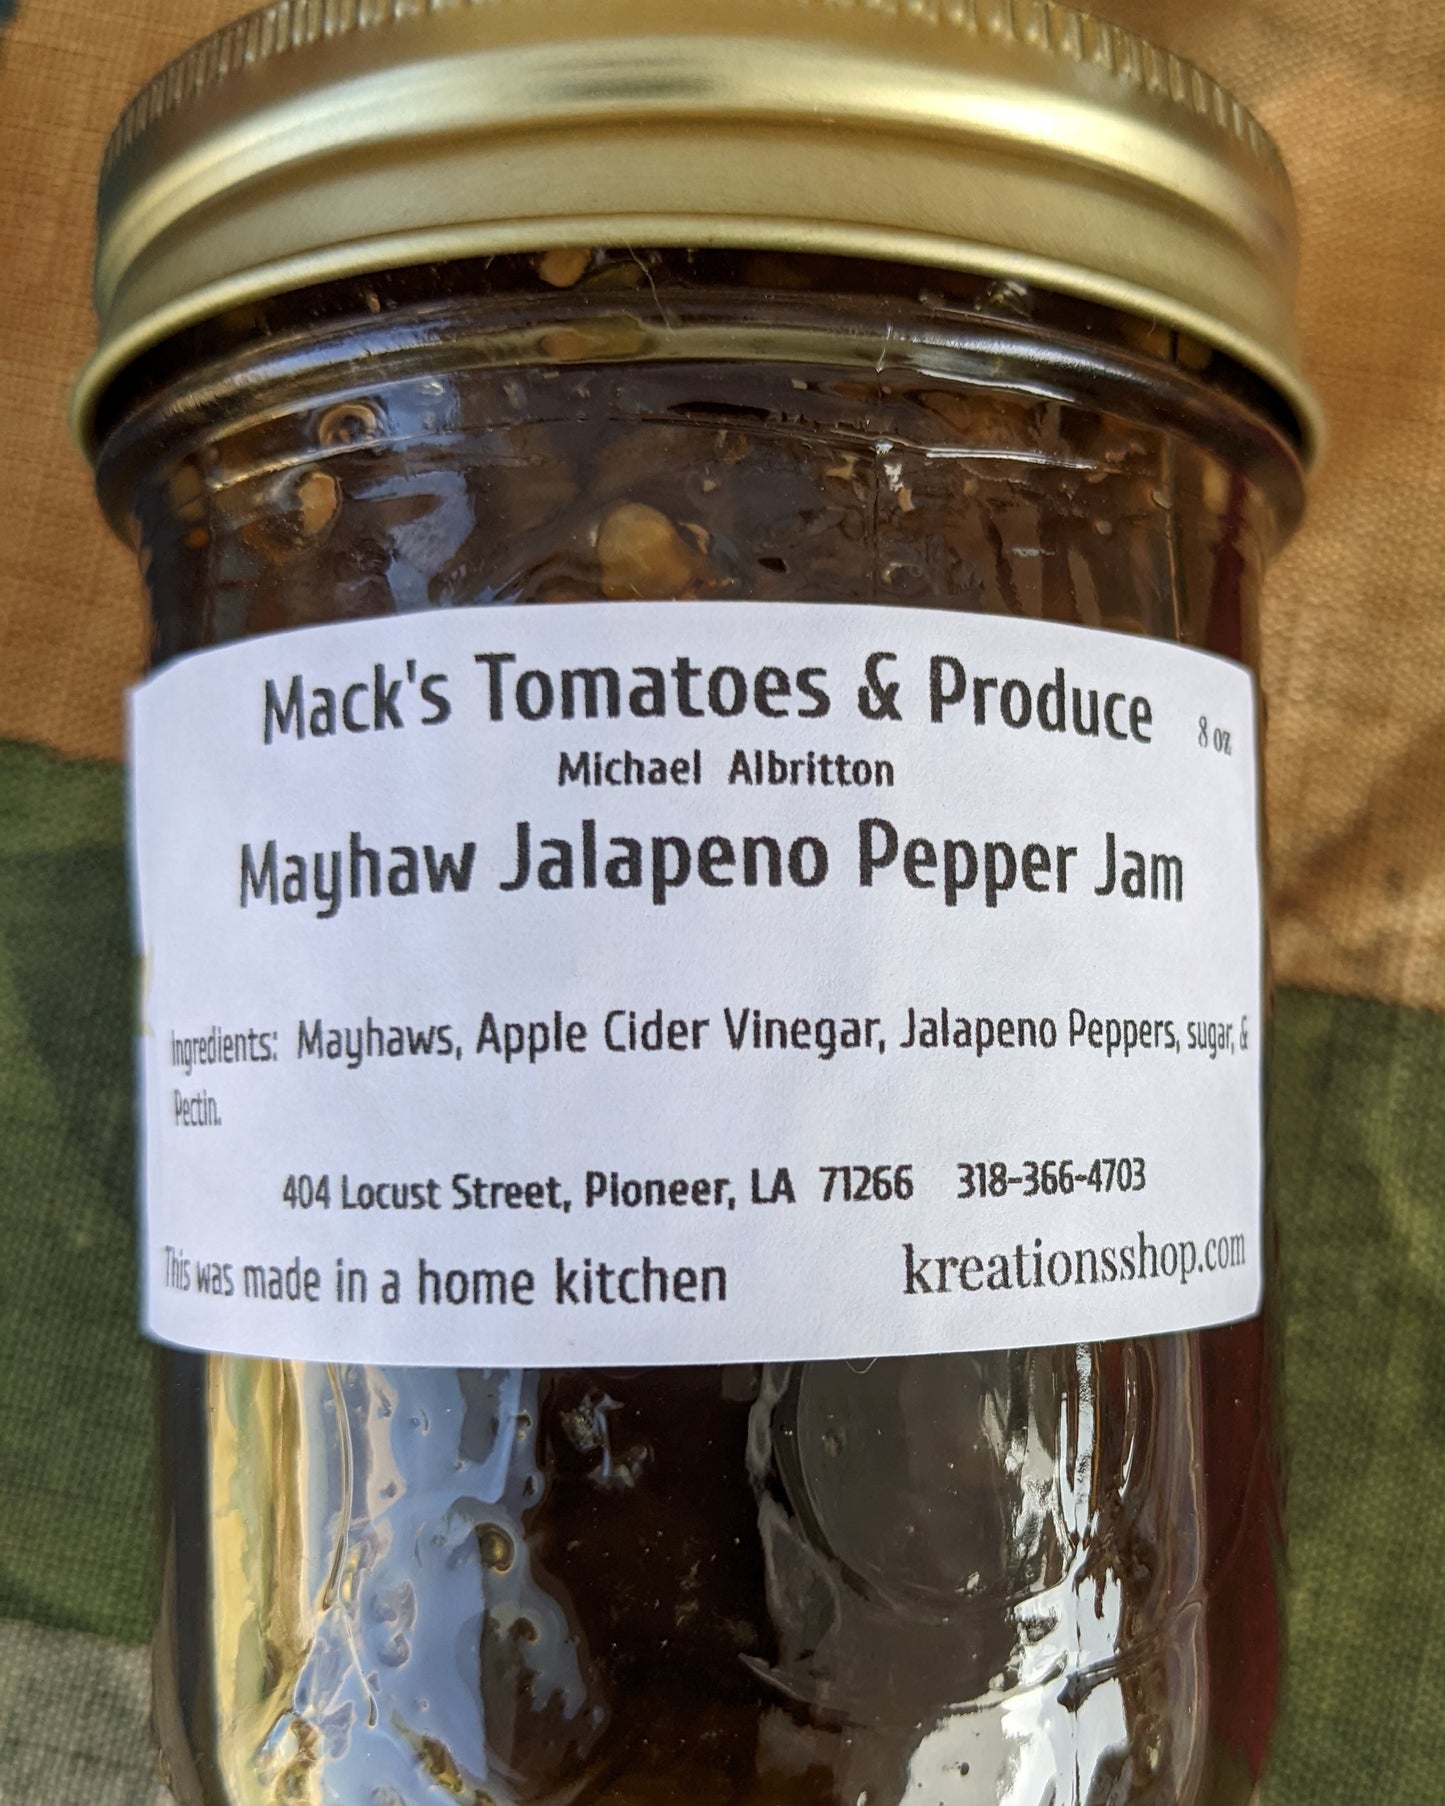 Mayhaw Jalapeno Pepper Jam